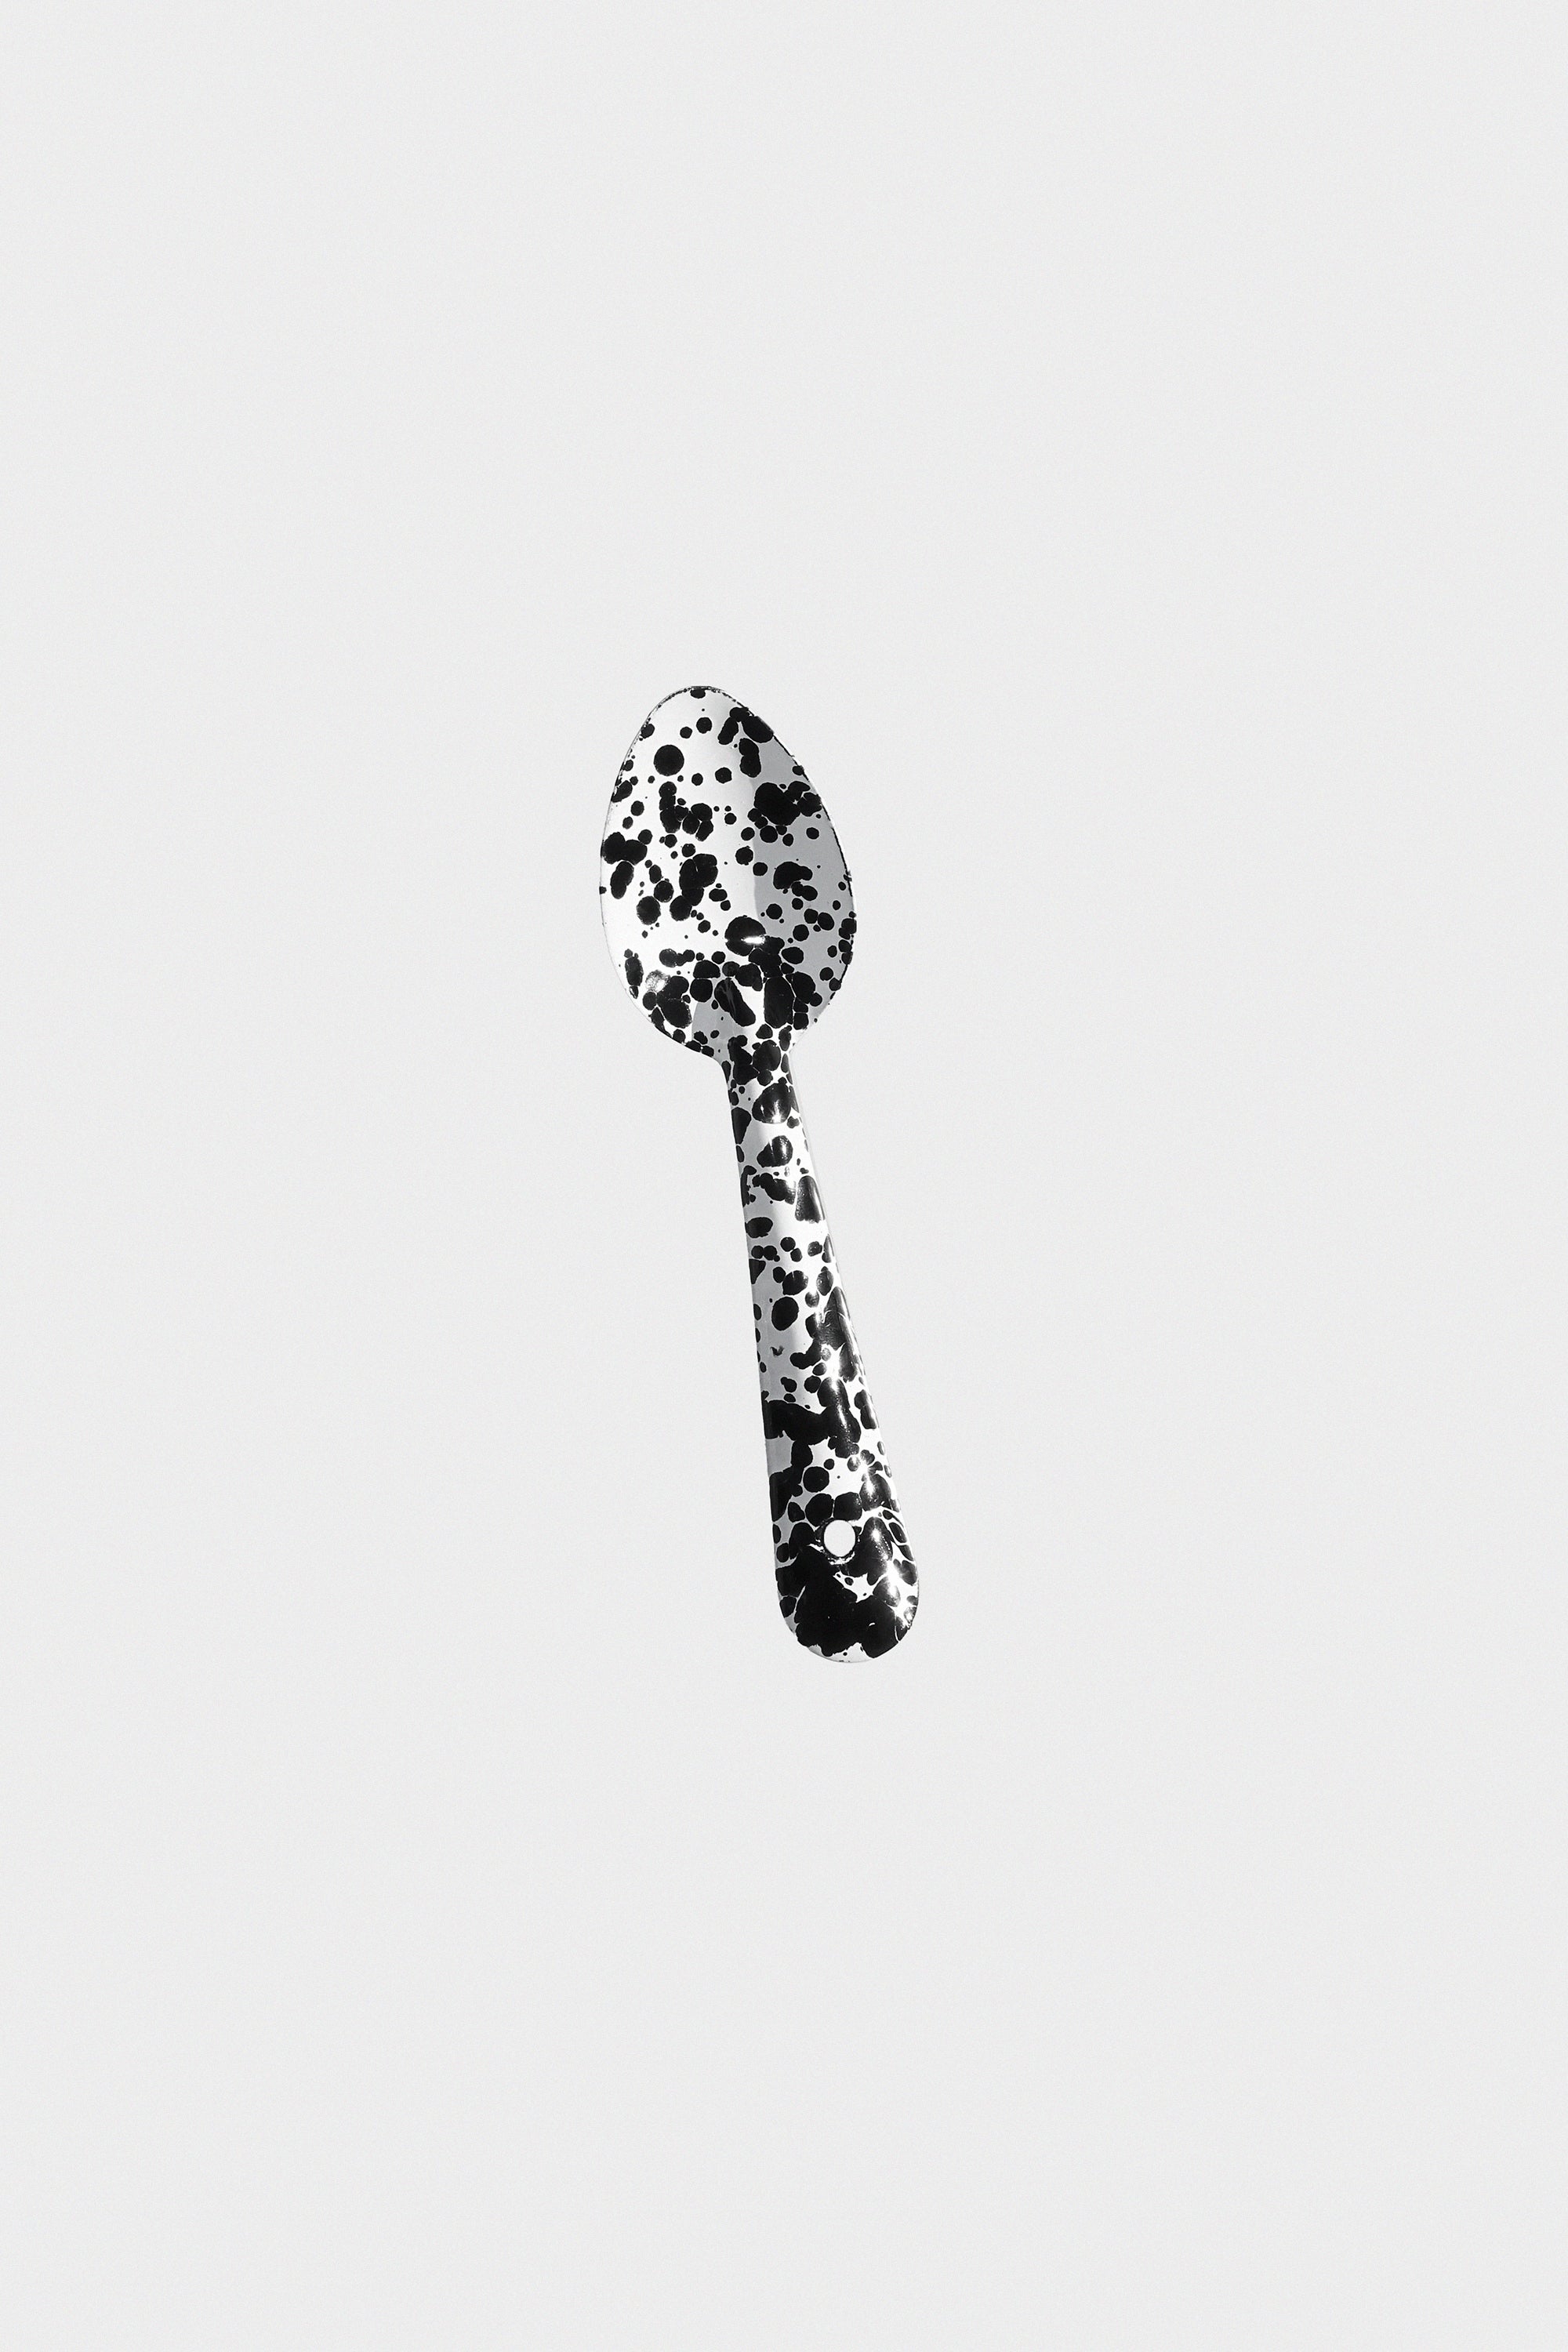 Small Spoon in Black Splatter Enamelware